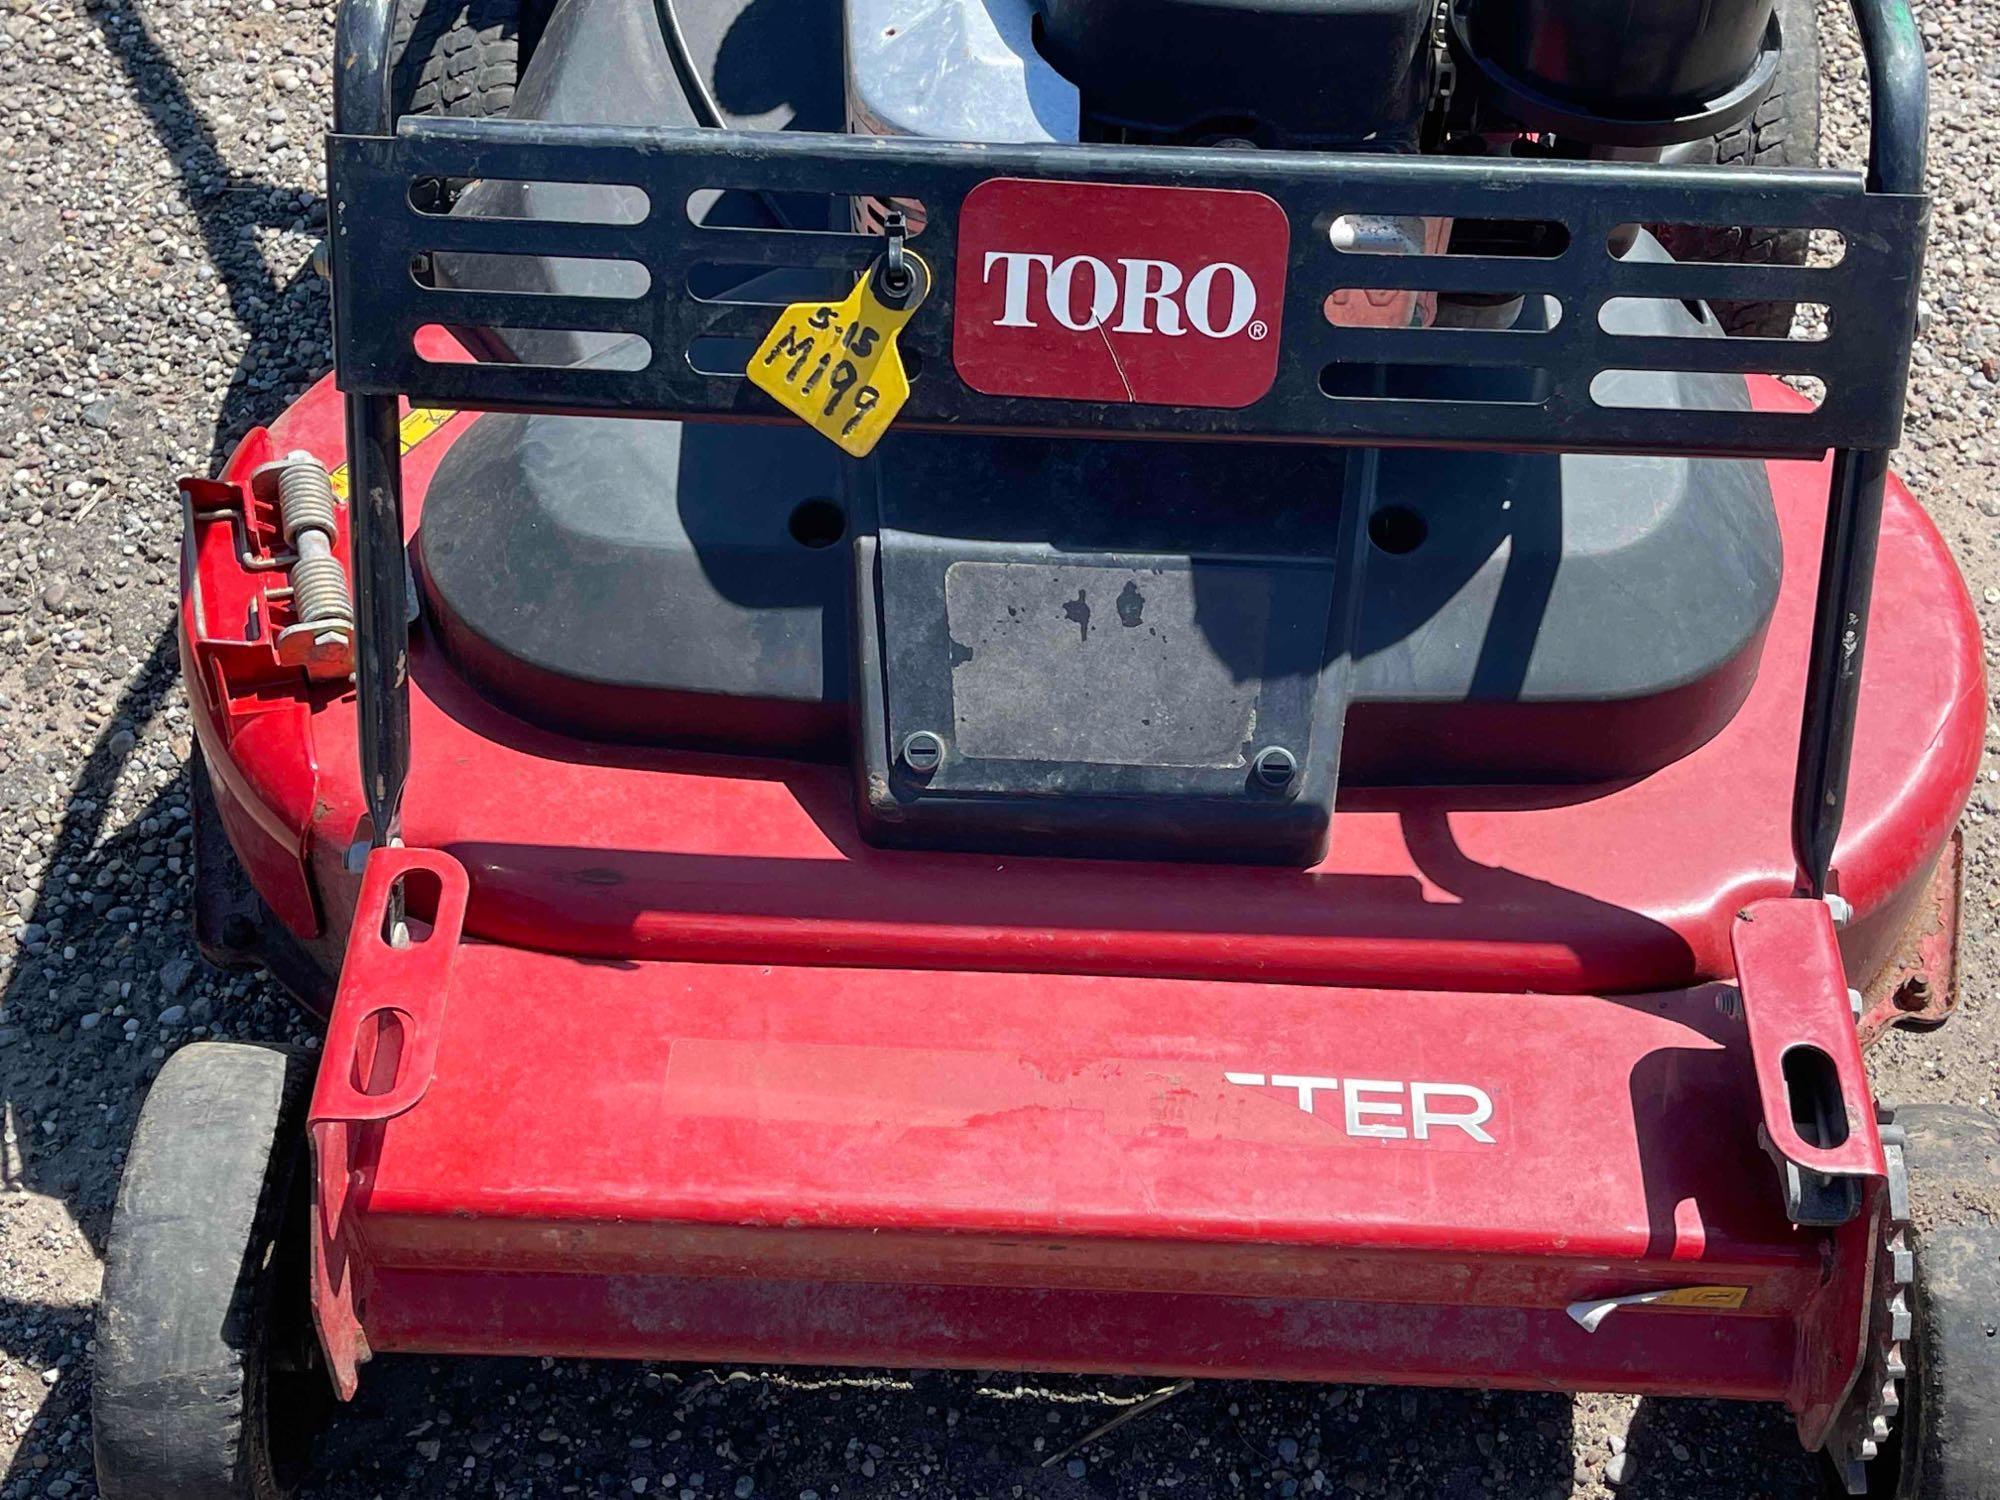 Toro commercial push mower with Kawasaki engine